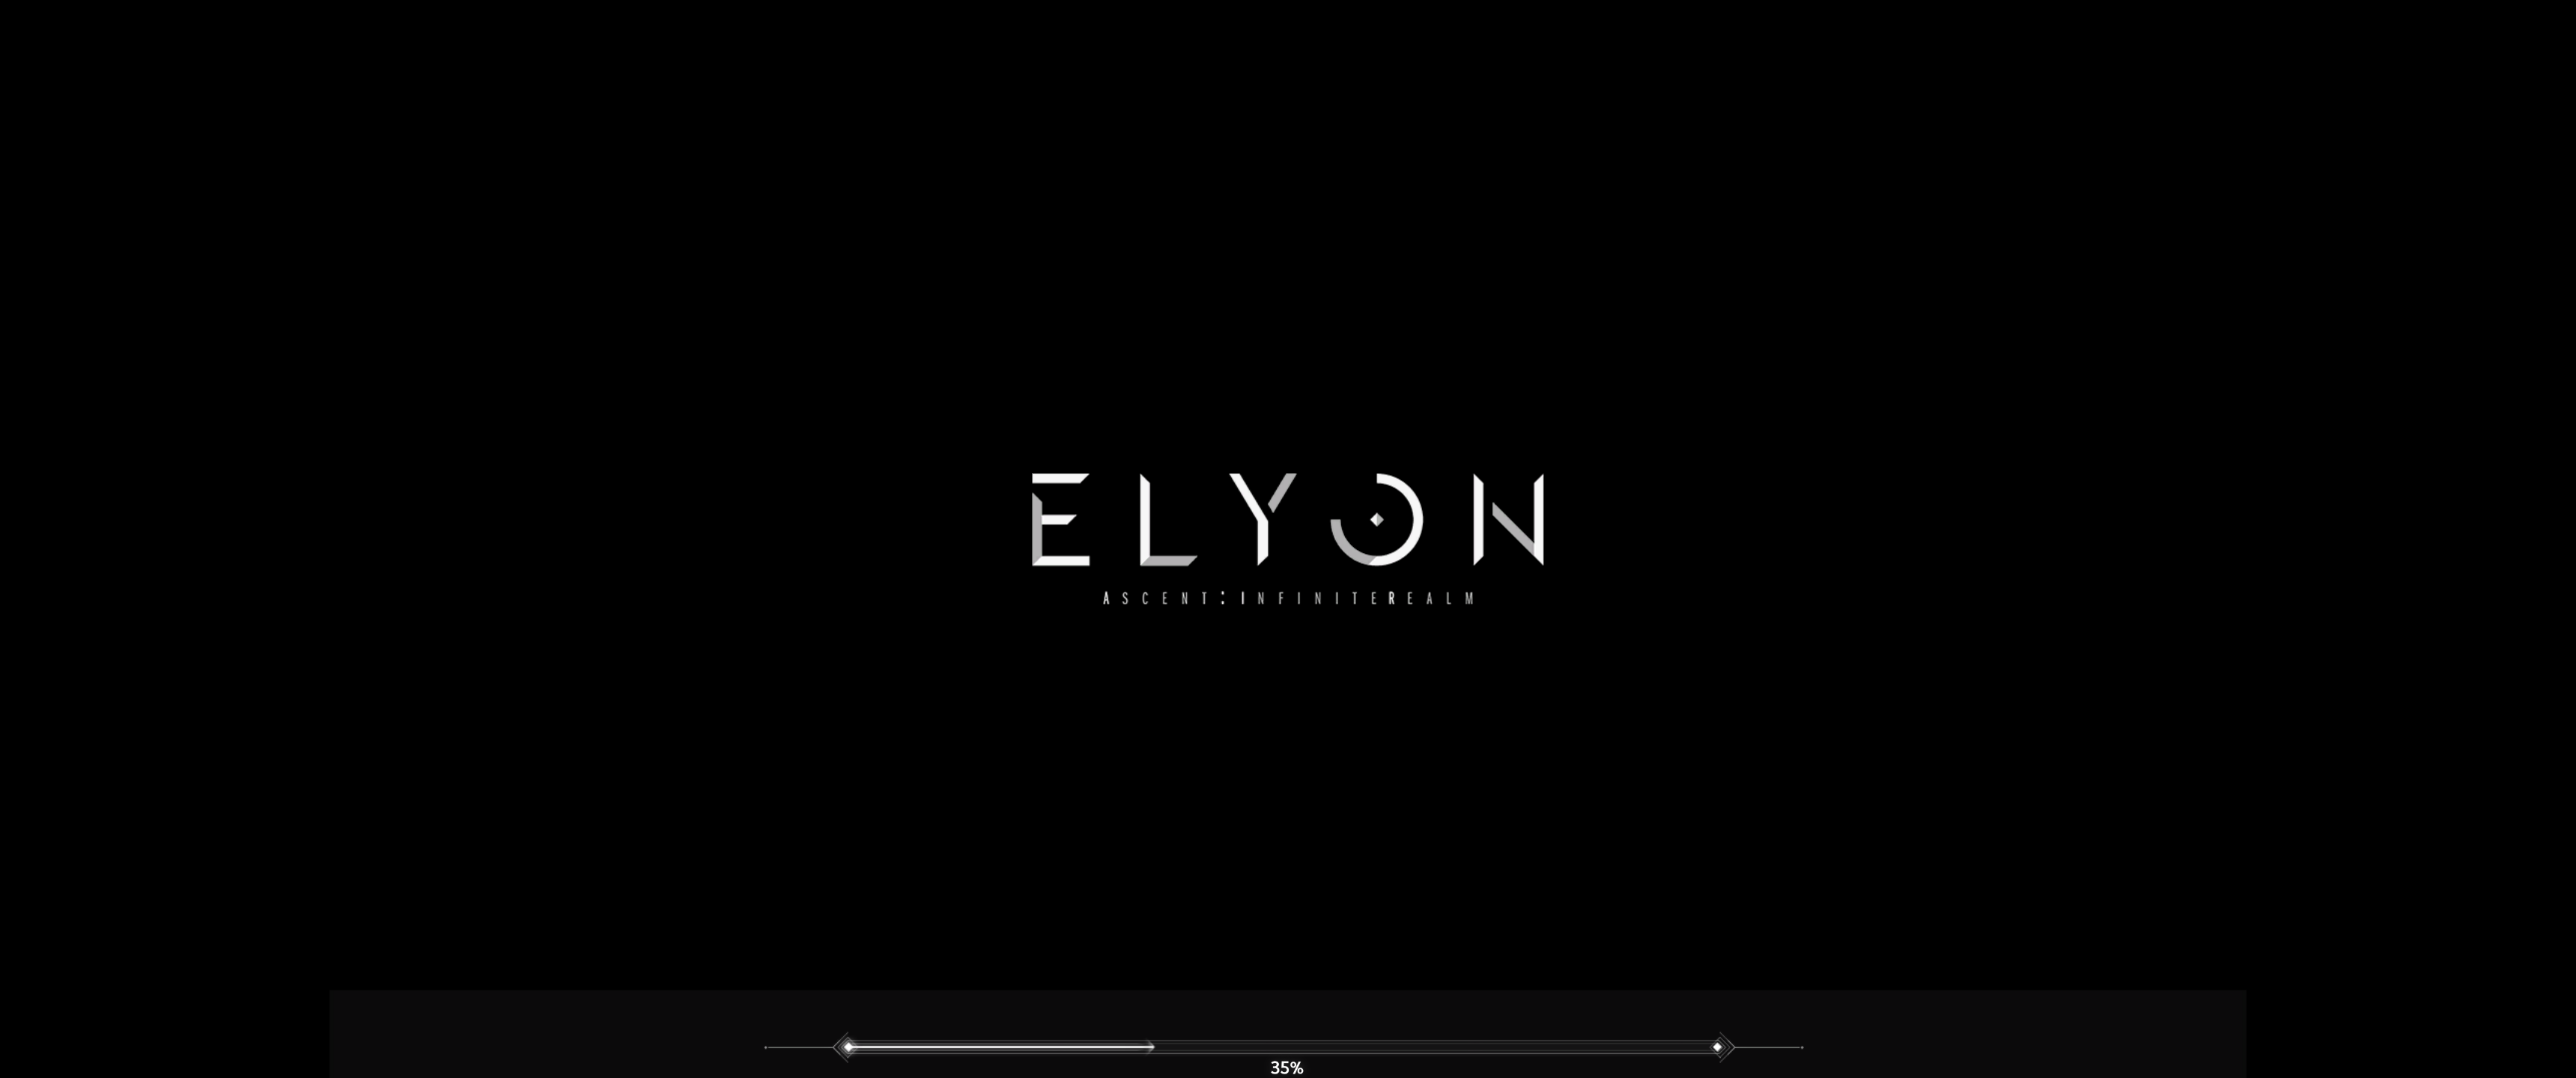 ELYON_ScreenShot_20200725_124902.png